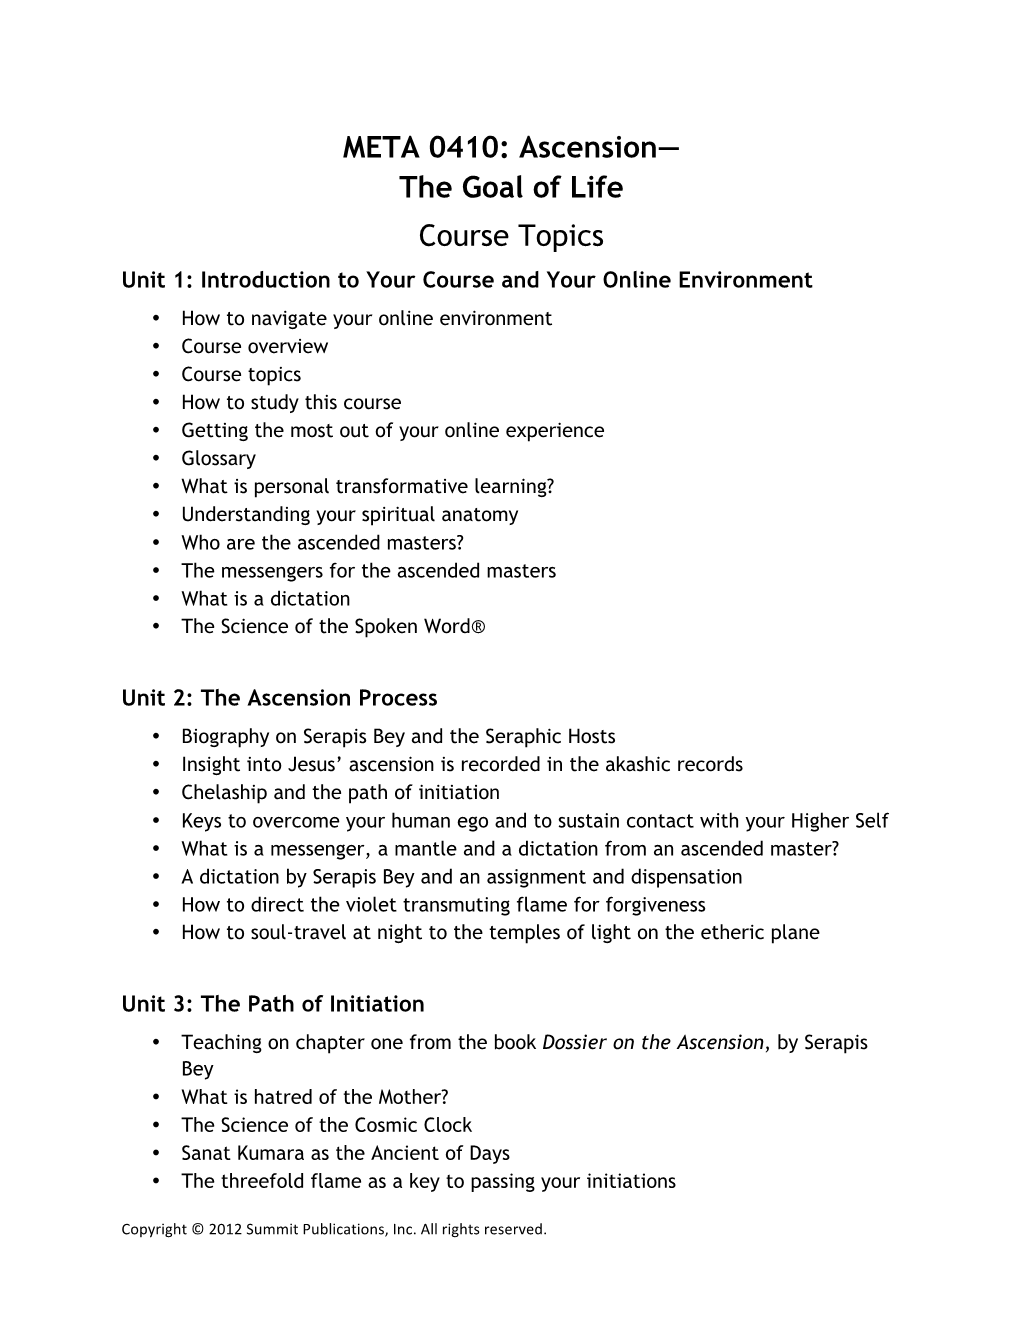 META 0401 Ascension: the Goal of Life